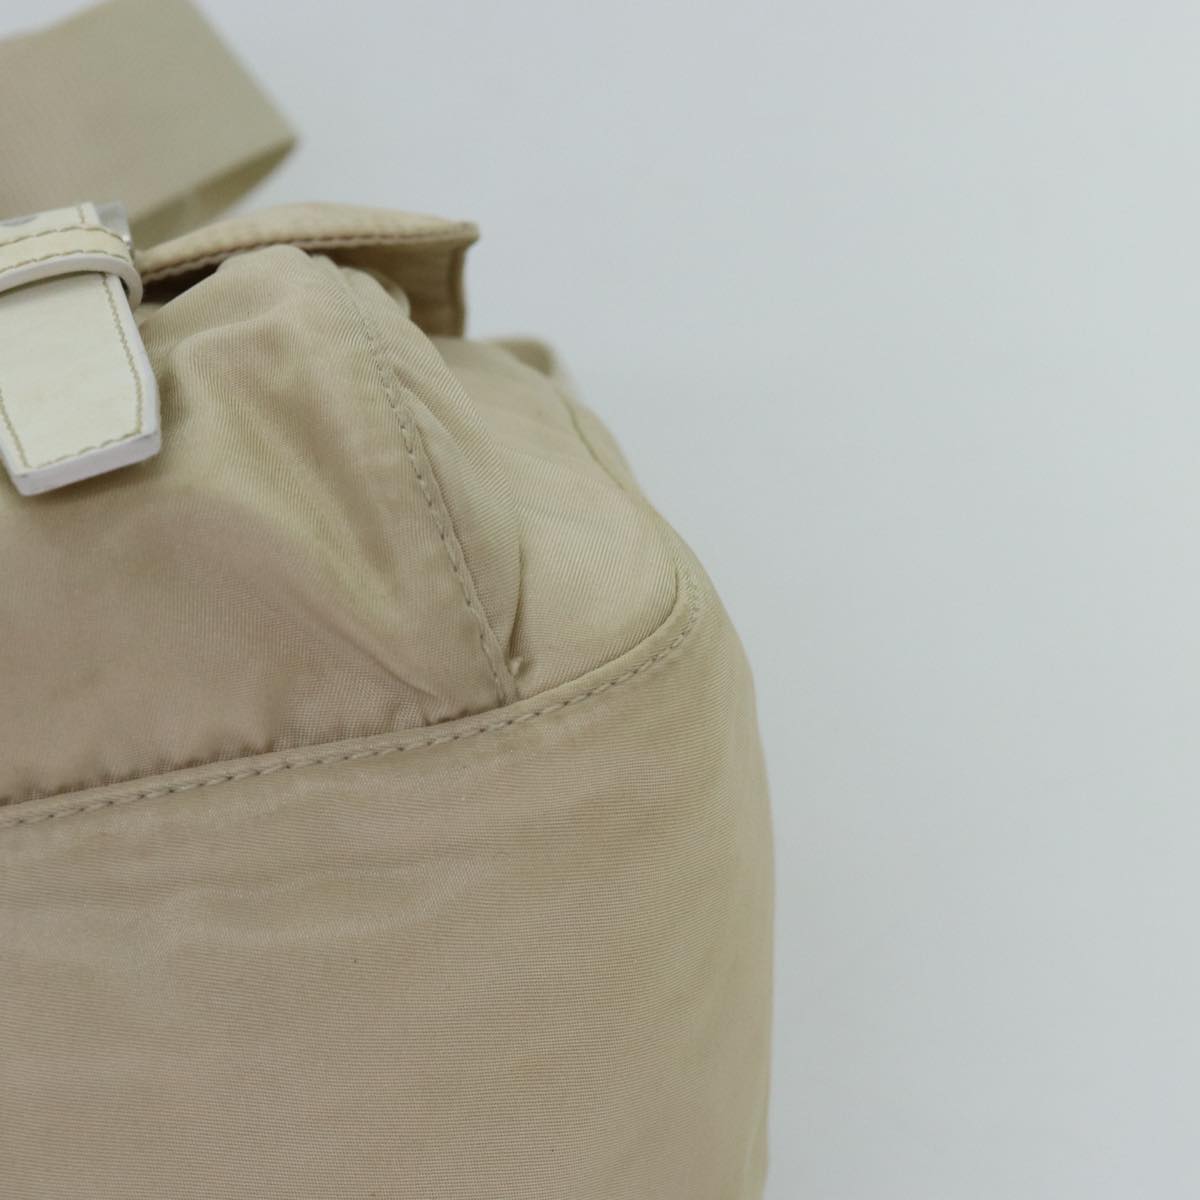 PRADA Shoulder Bag Nylon Beige Auth 74401